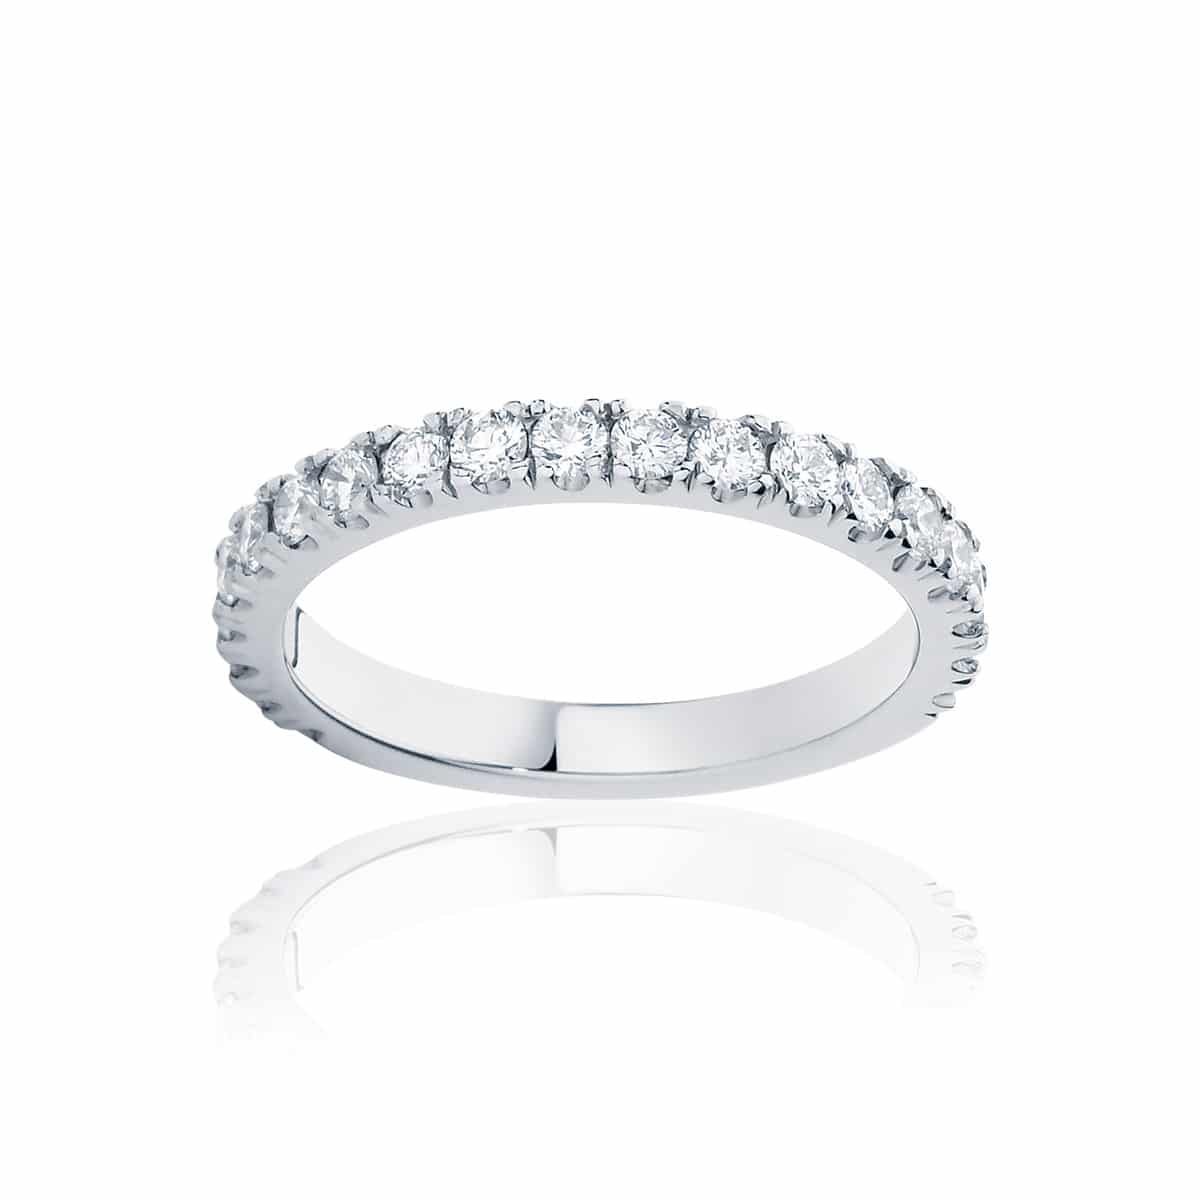 Buy White Gold Rings for Women by Iski Uski Online | Ajio.com